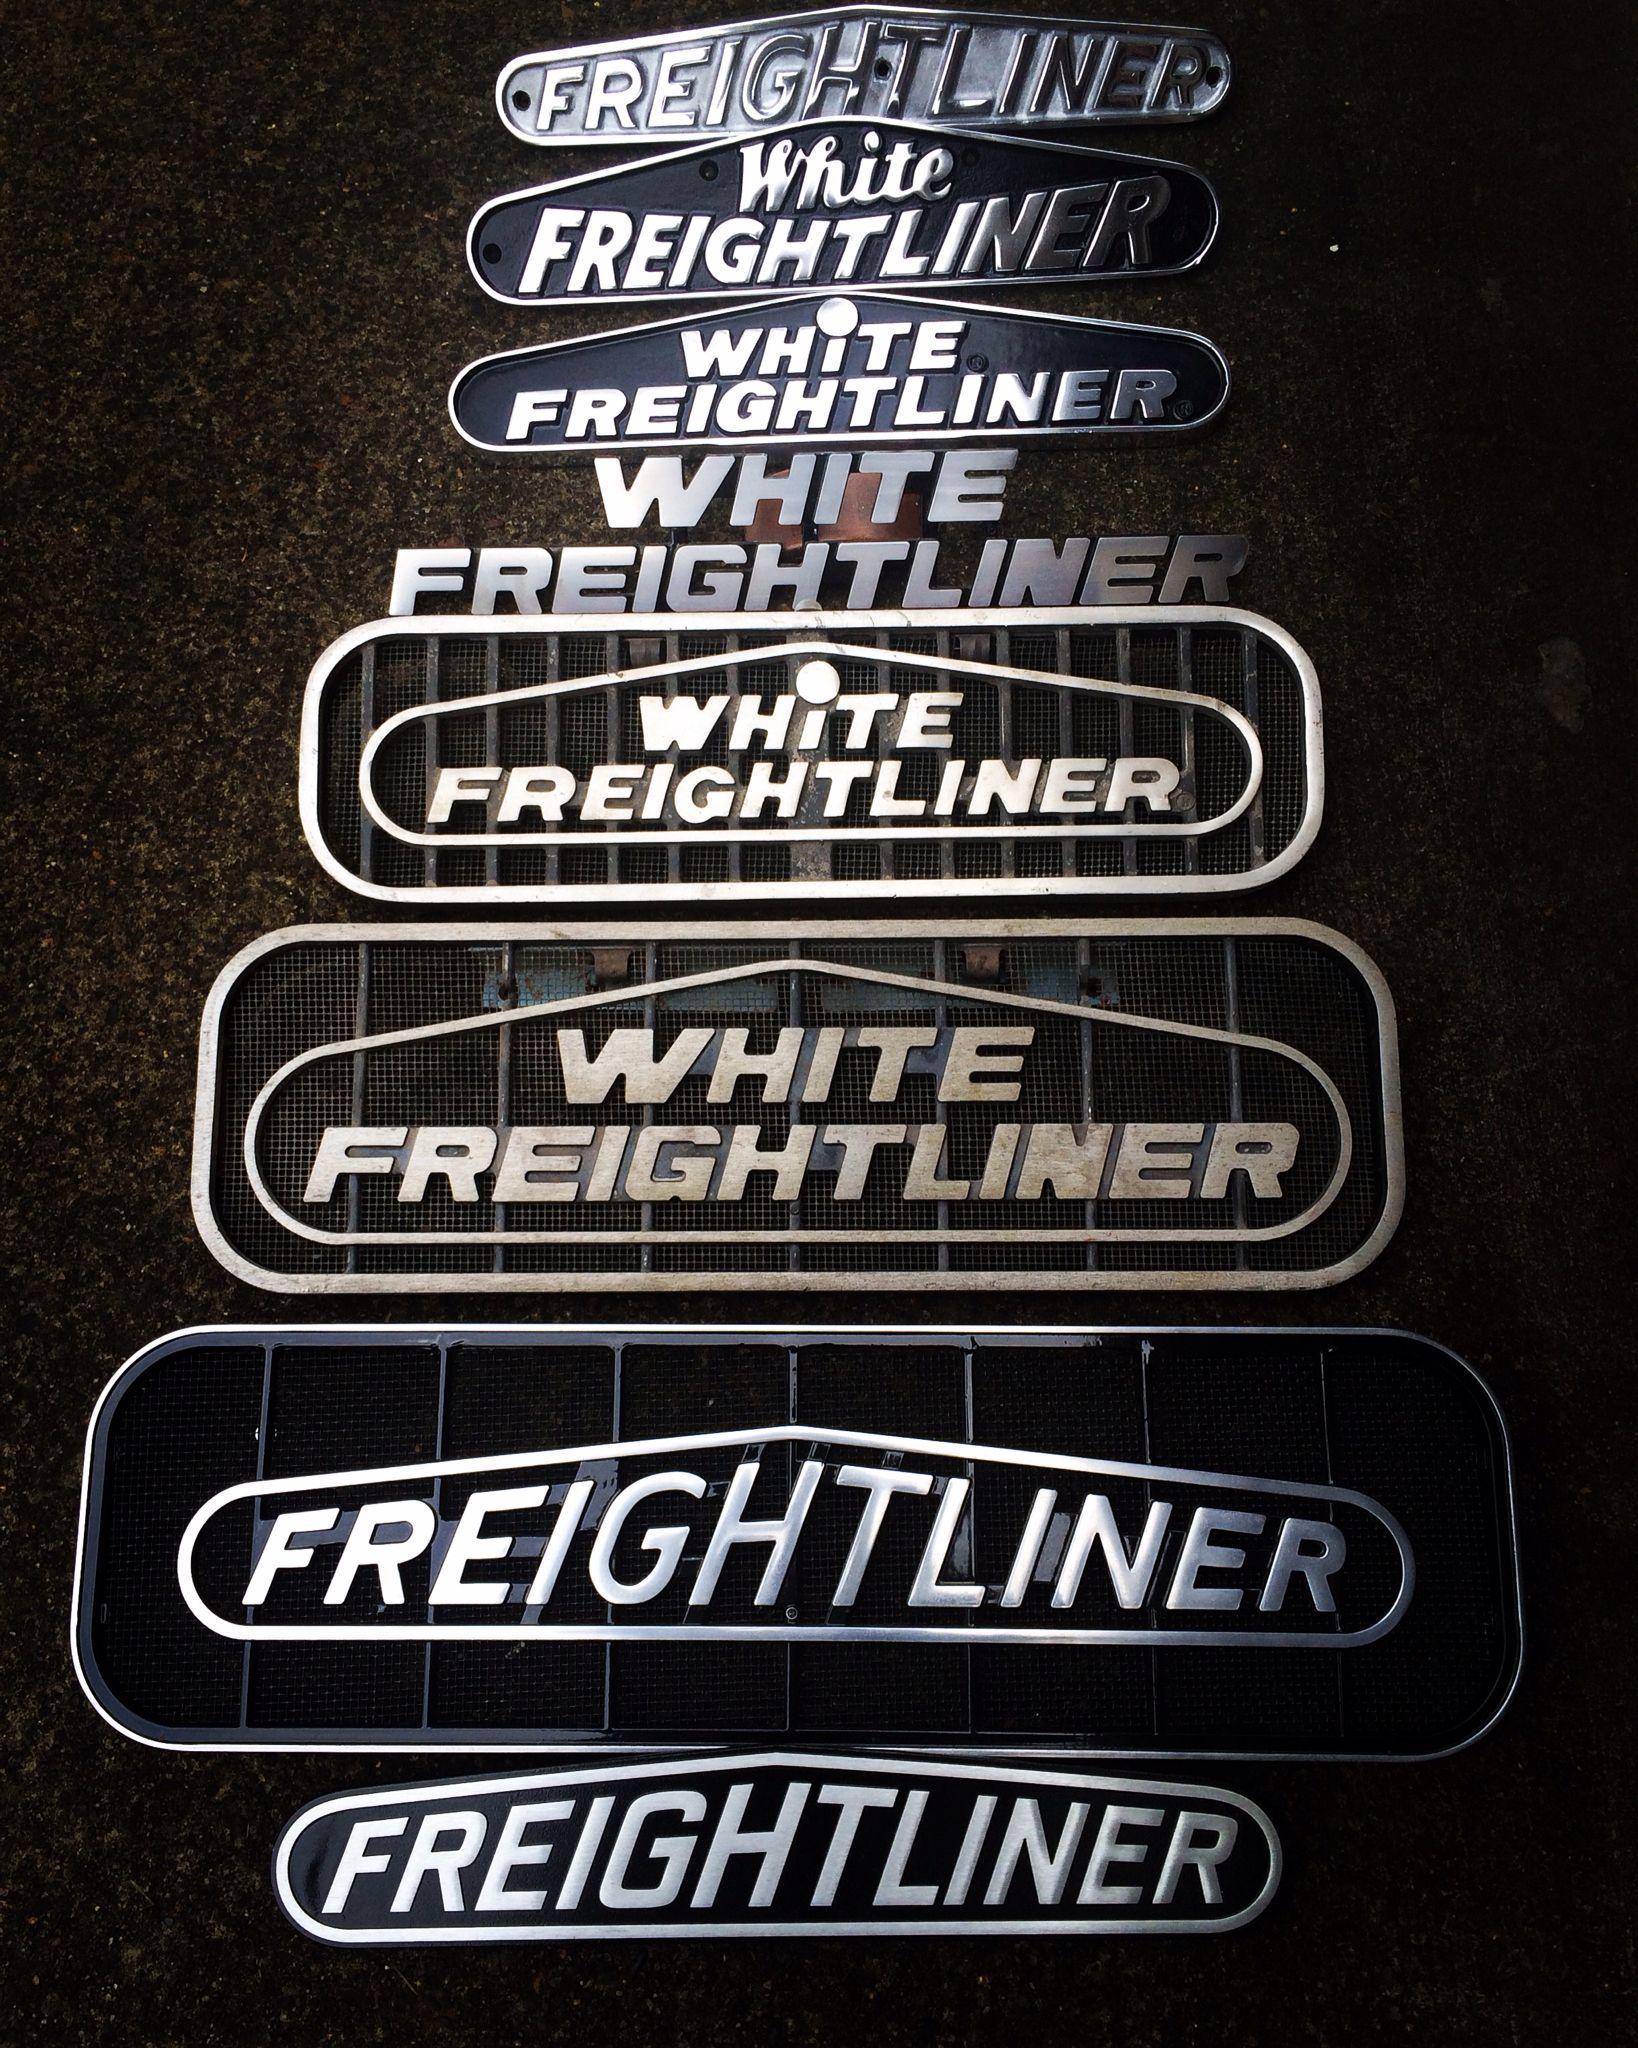 Freightliner Truck Logo - Part of my White Freightliner, Freightliner emblem collection ...